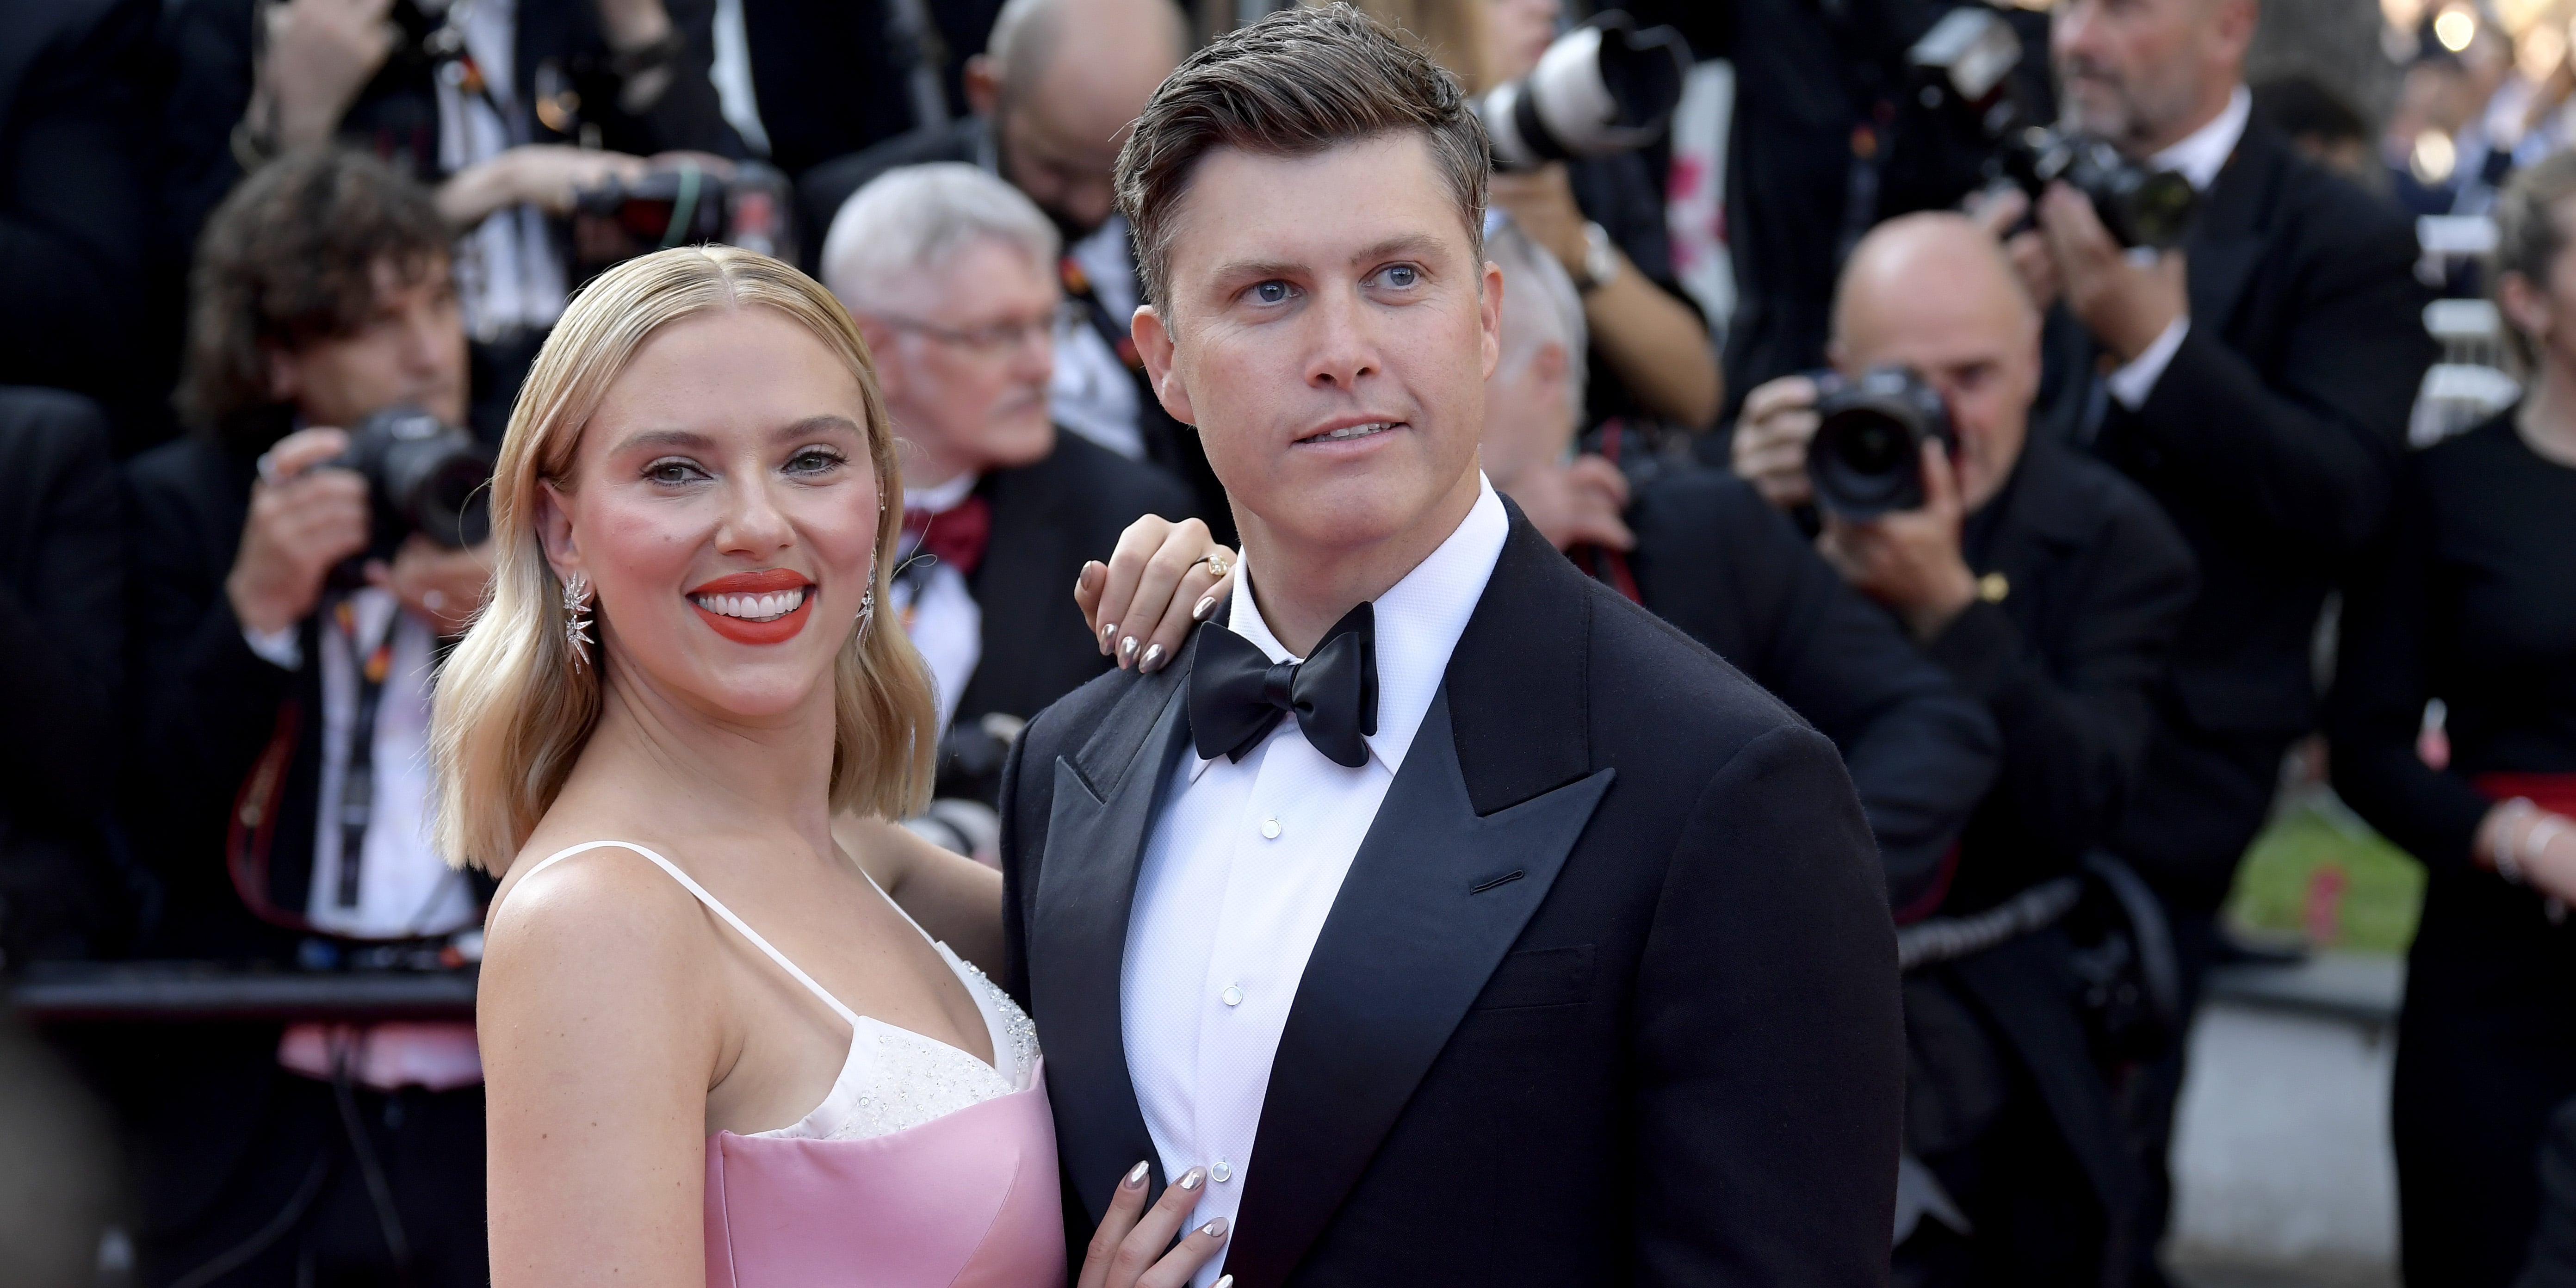 Scarlett Johansson: Why I Felt 'Protective' of My Pregnancies